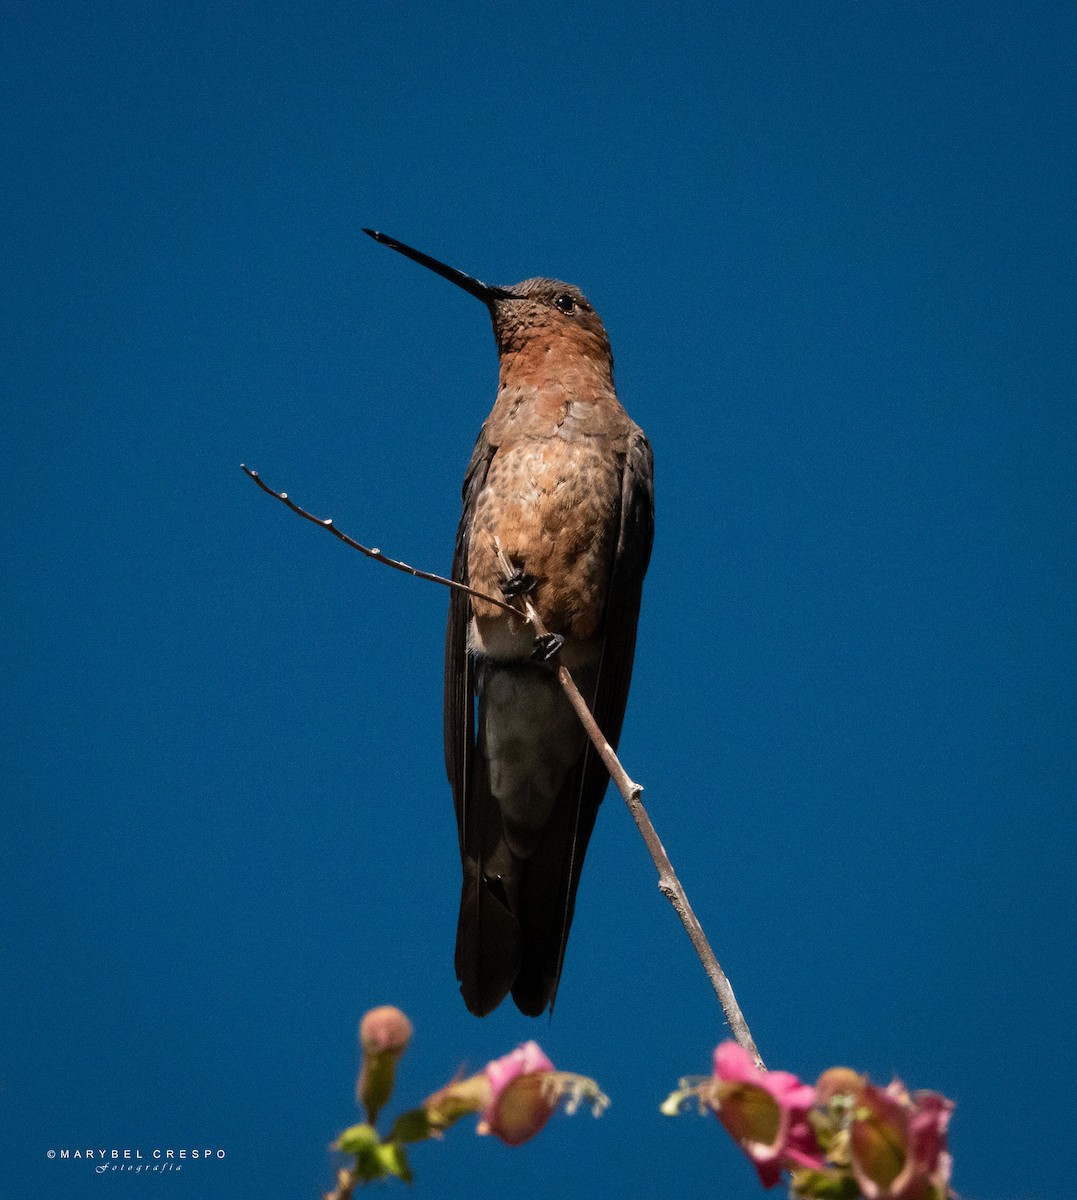 Giant Hummingbird - Marybel Crespo Saucedo